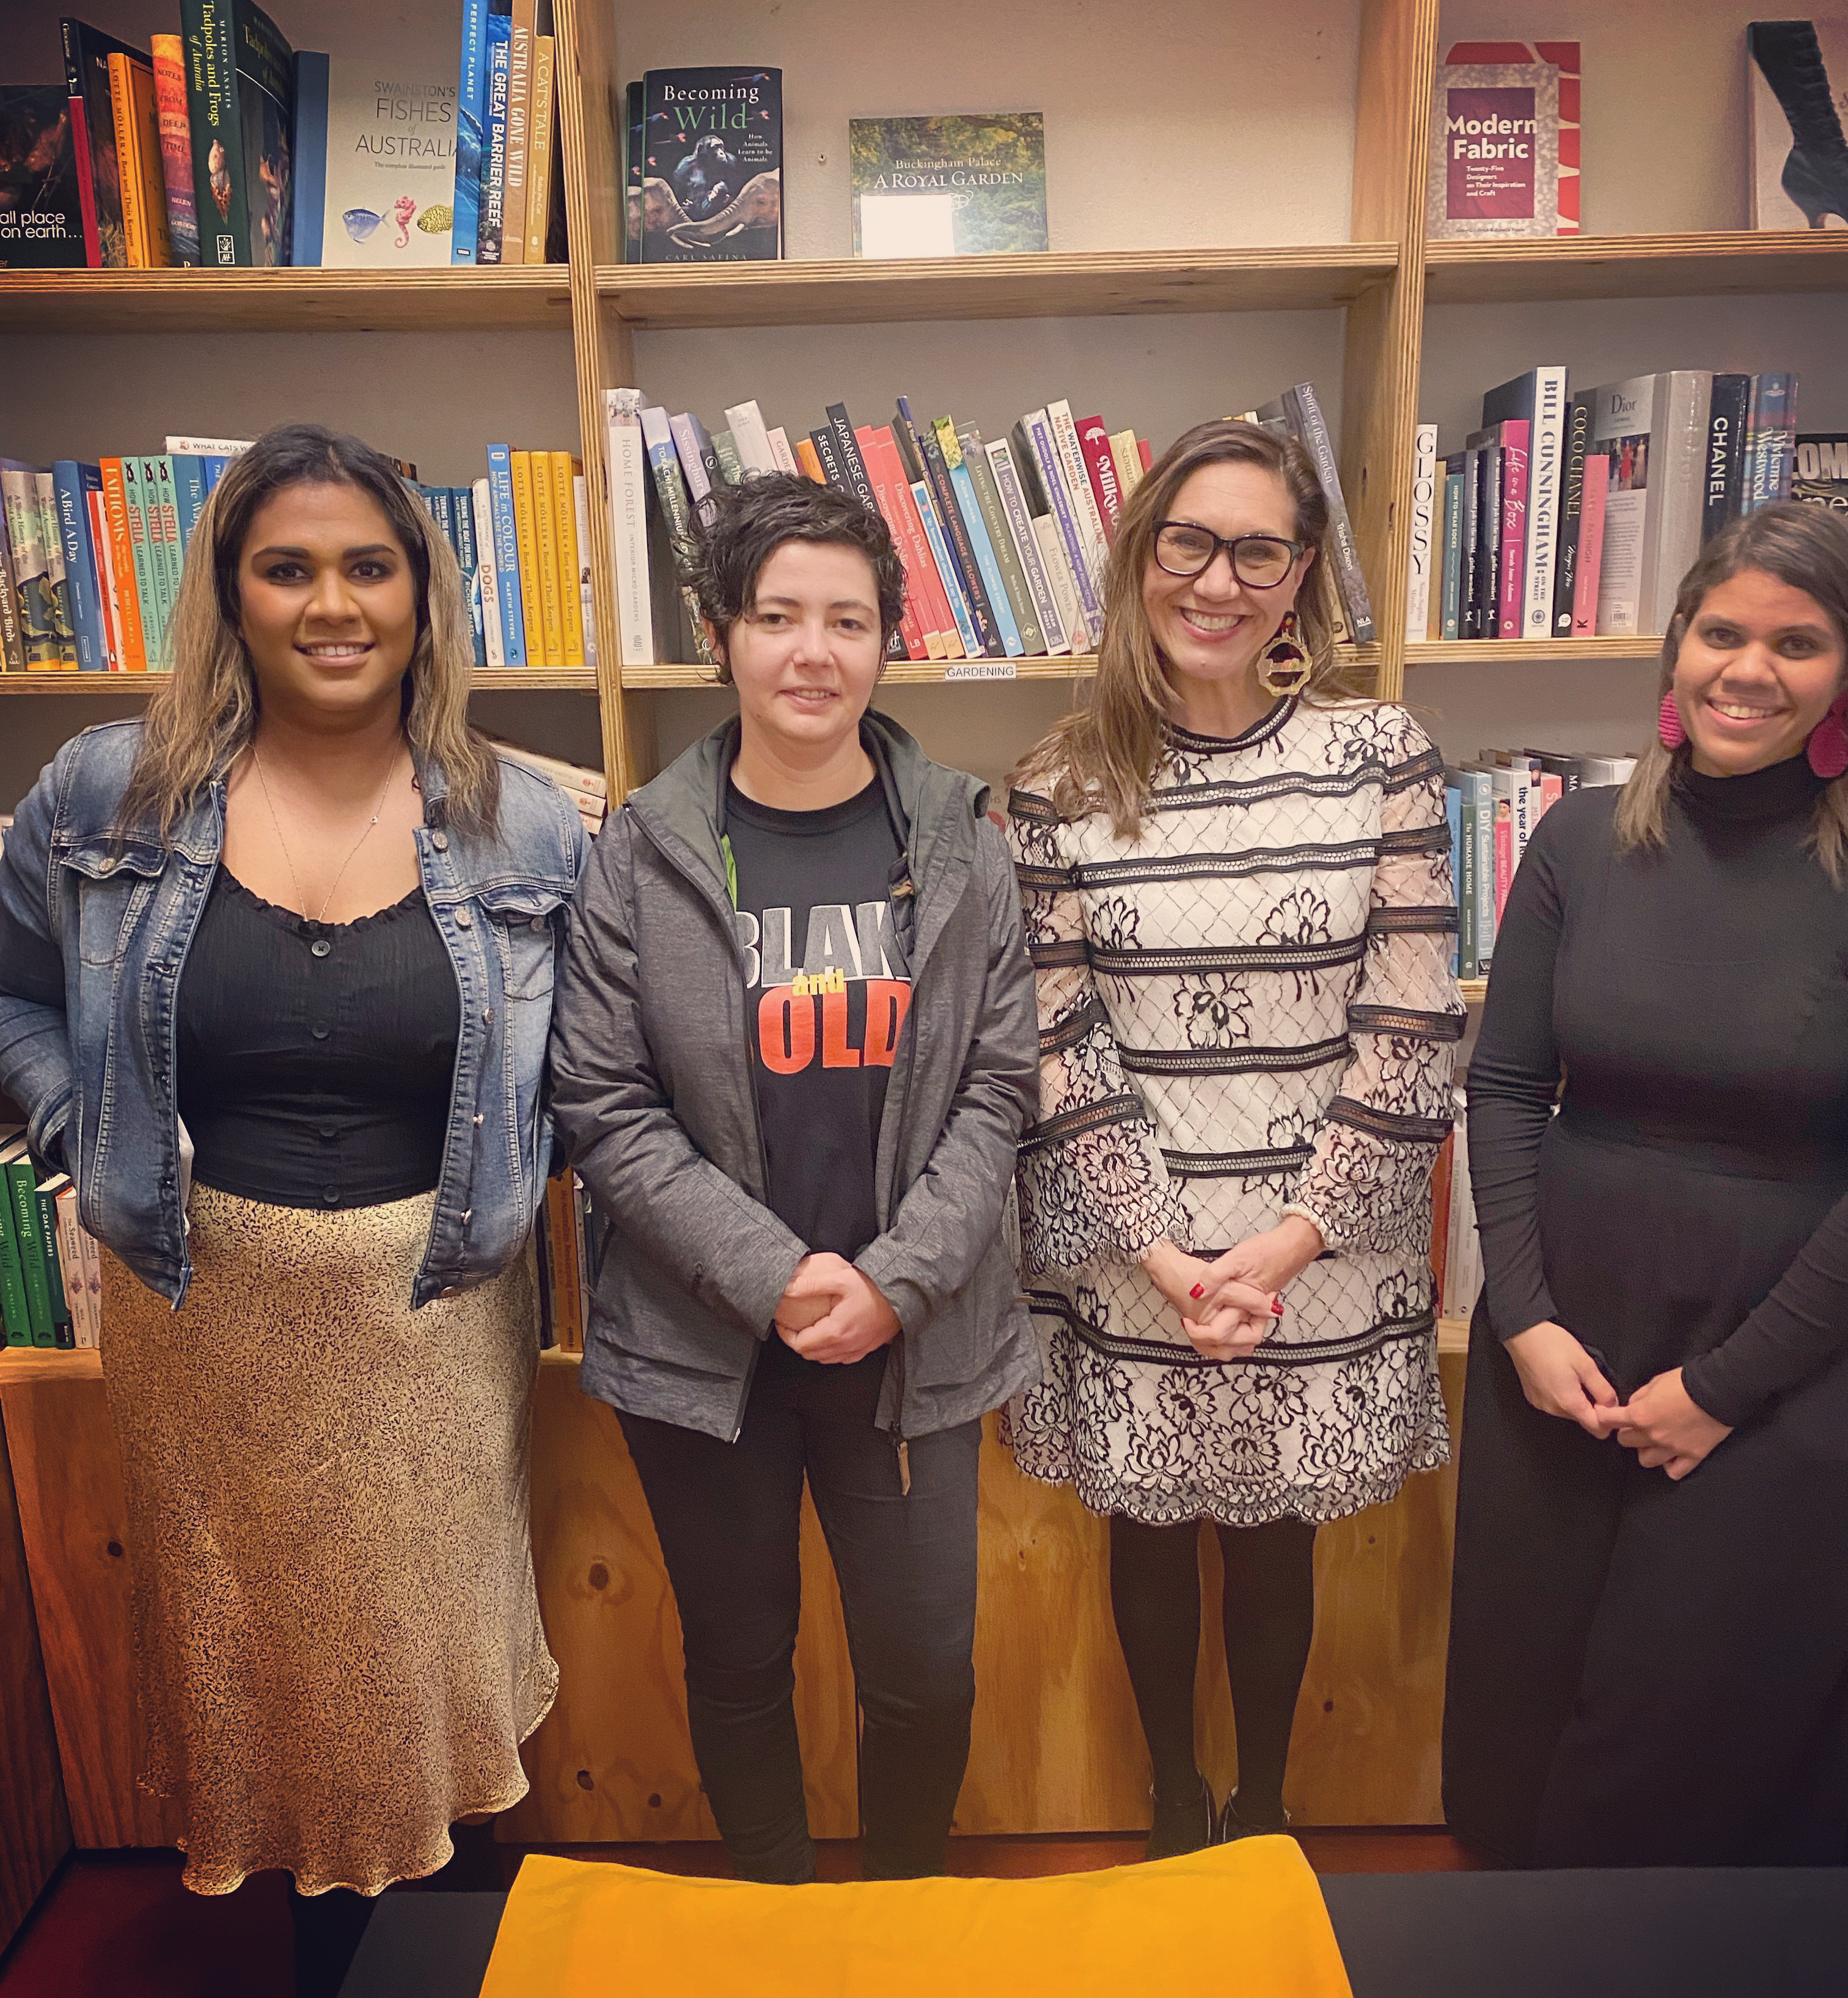  Four women pose in front of a bookshelf at Avid Reader: Lauren Bandit, Grace Lucas Pennington, Anita Heiss and Yasmin Smith.